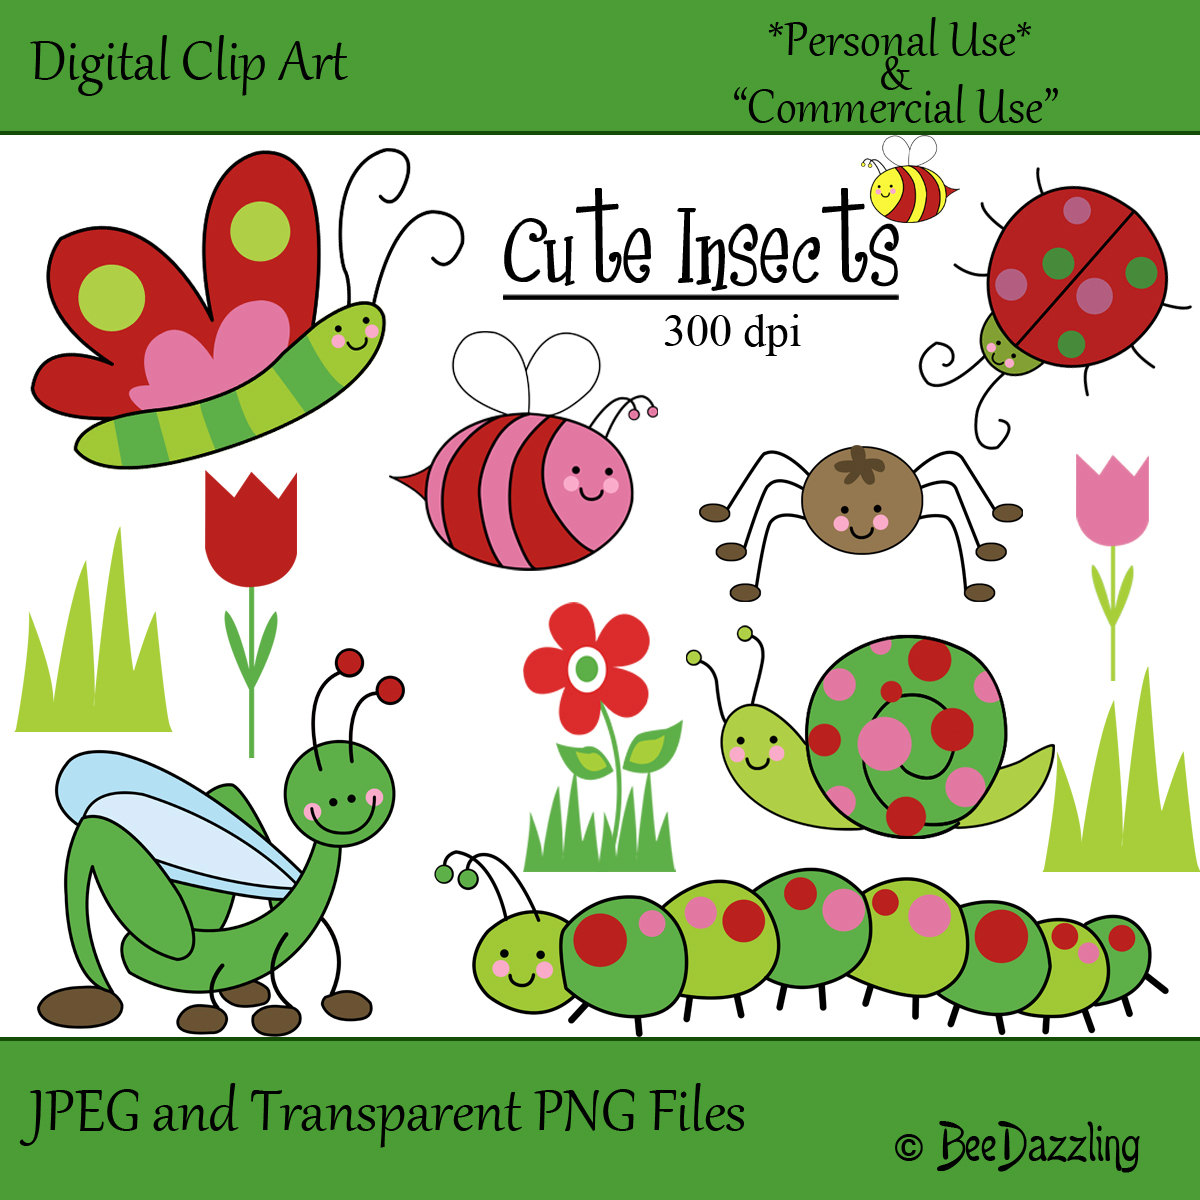 Pin Pin Caterpillar Cartoon Clip Art Cake On Pinterest On Pinterest